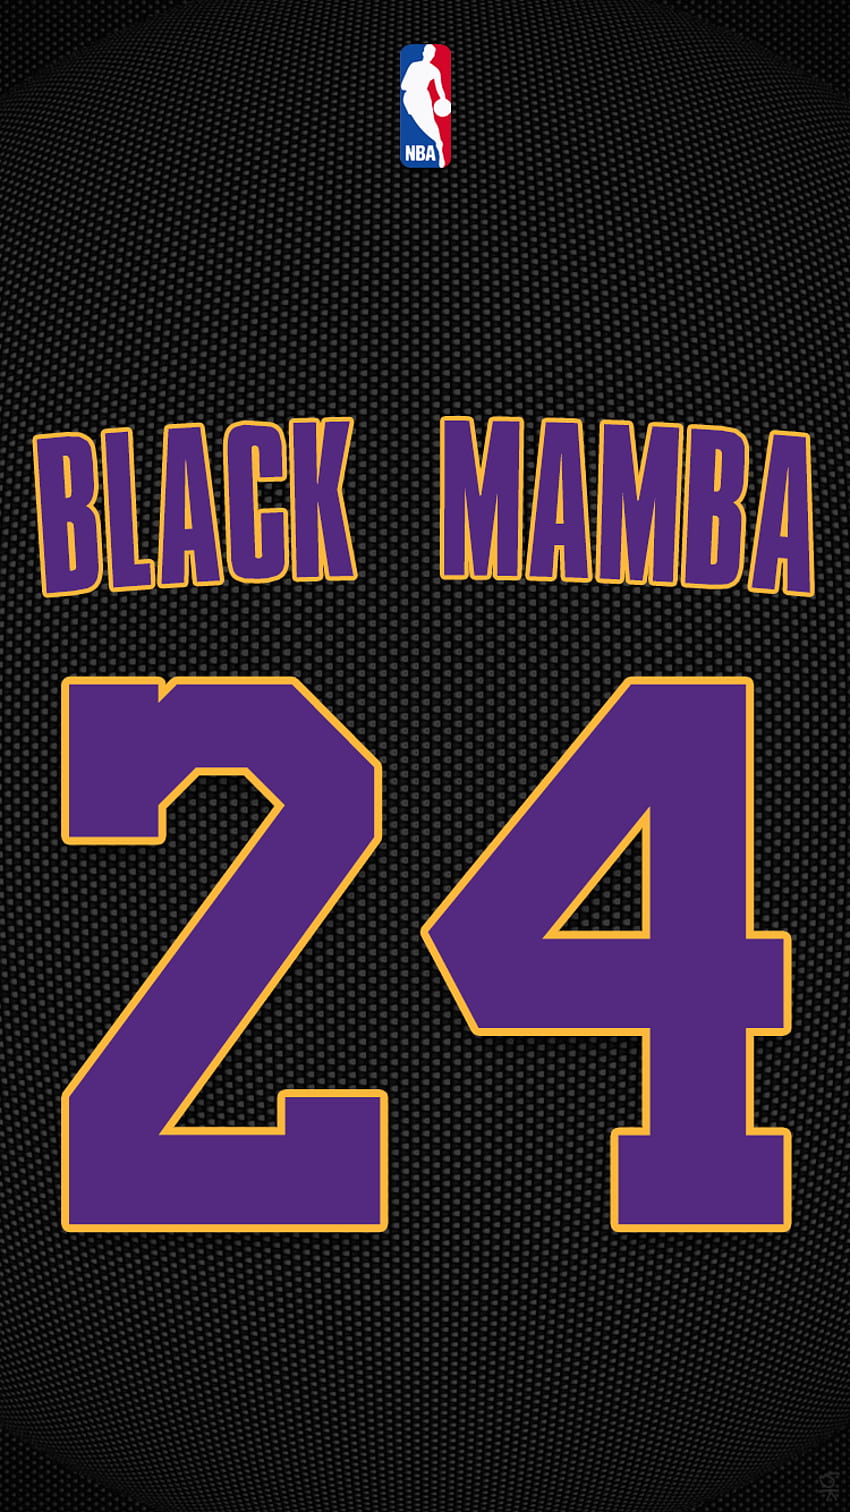 Kobe Bryant Black Mamba Terbaik - Black Mamba, Black Mamba Logo wallpaper ponsel HD